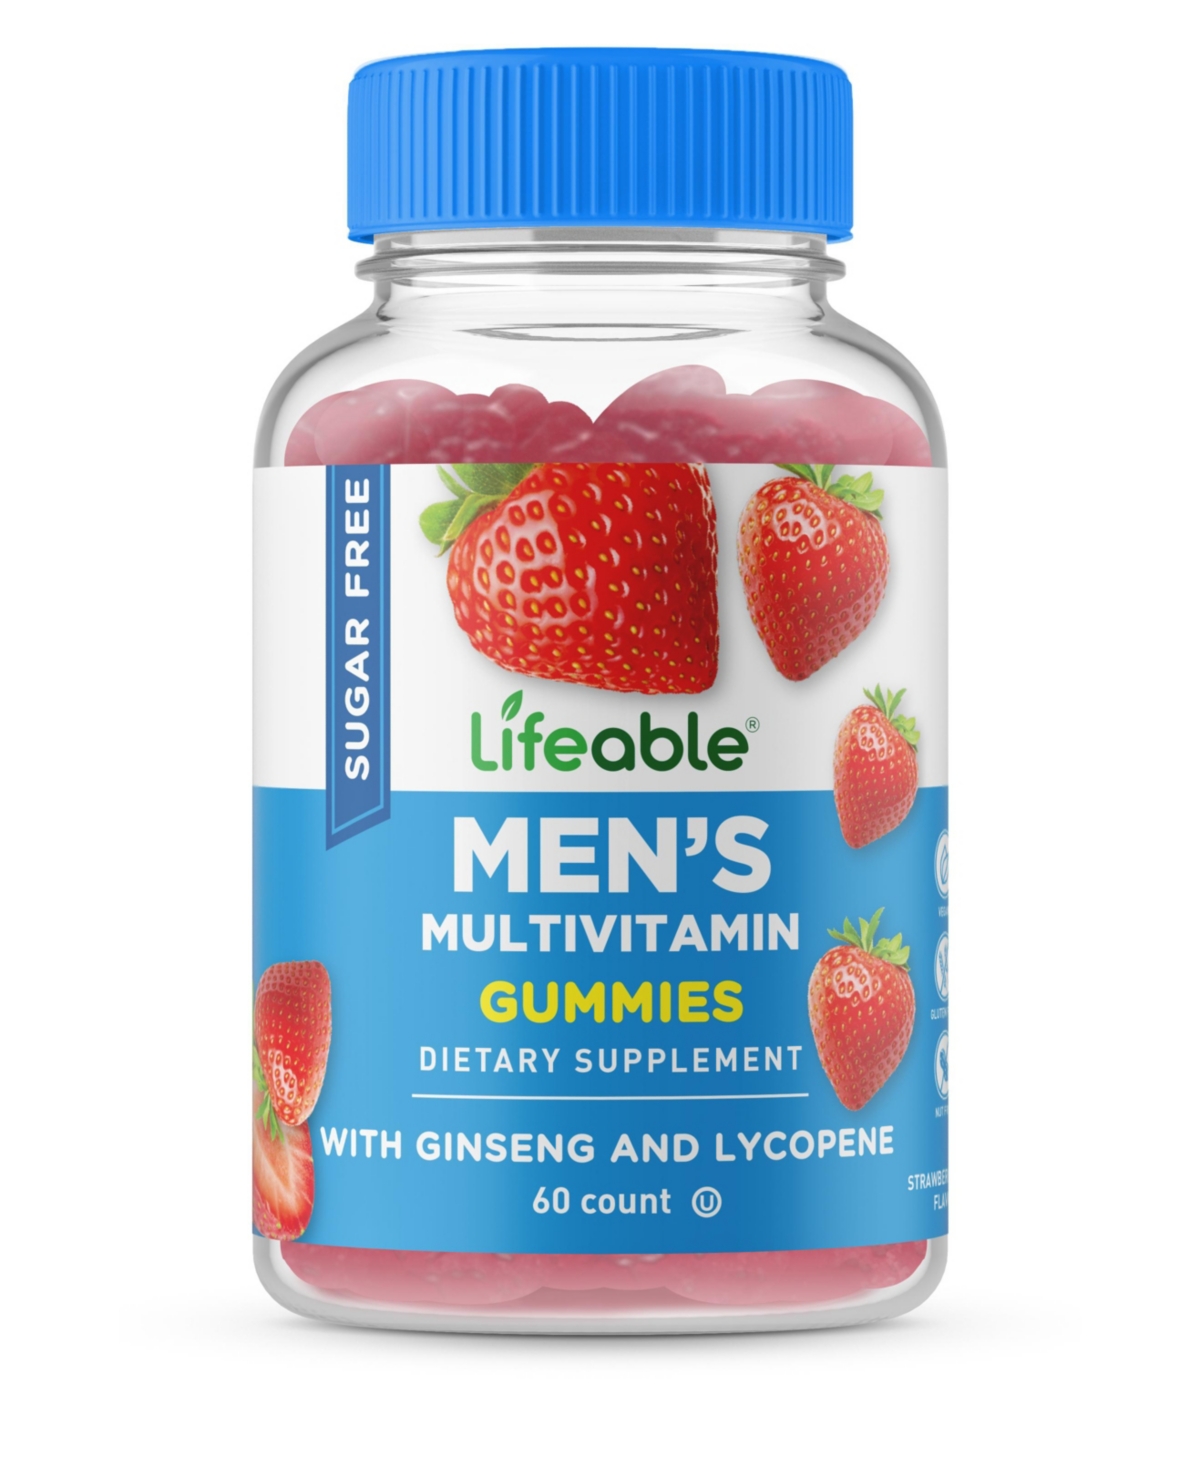 Sugar Free Multivitamin for Men Gummies - Immunity, Digestion, Bones, And Skin - Great Tasting, Dietary Supplement Vitamins - 60 Gummies